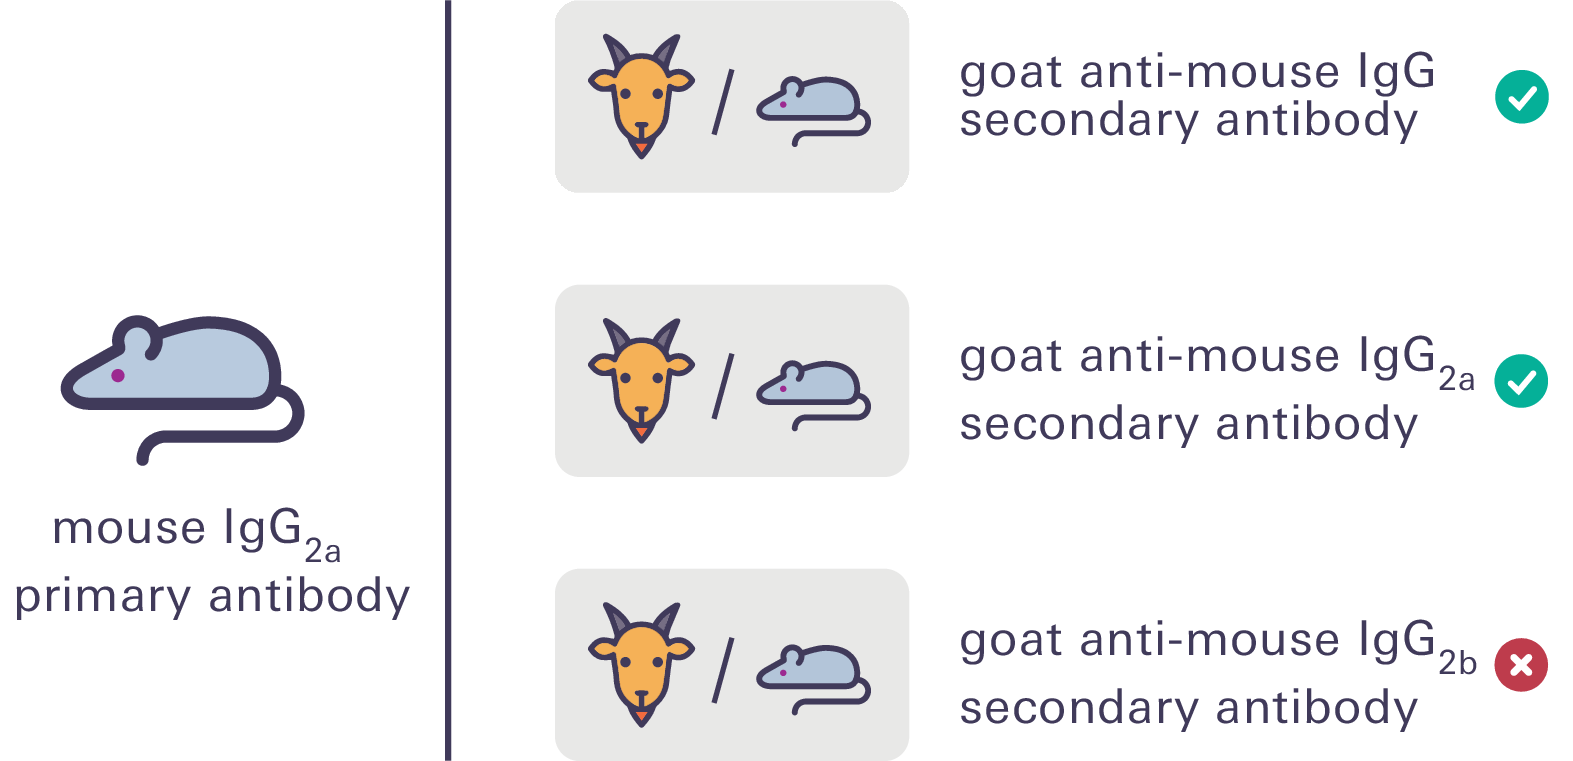 Choosing a secondary antibody subclass